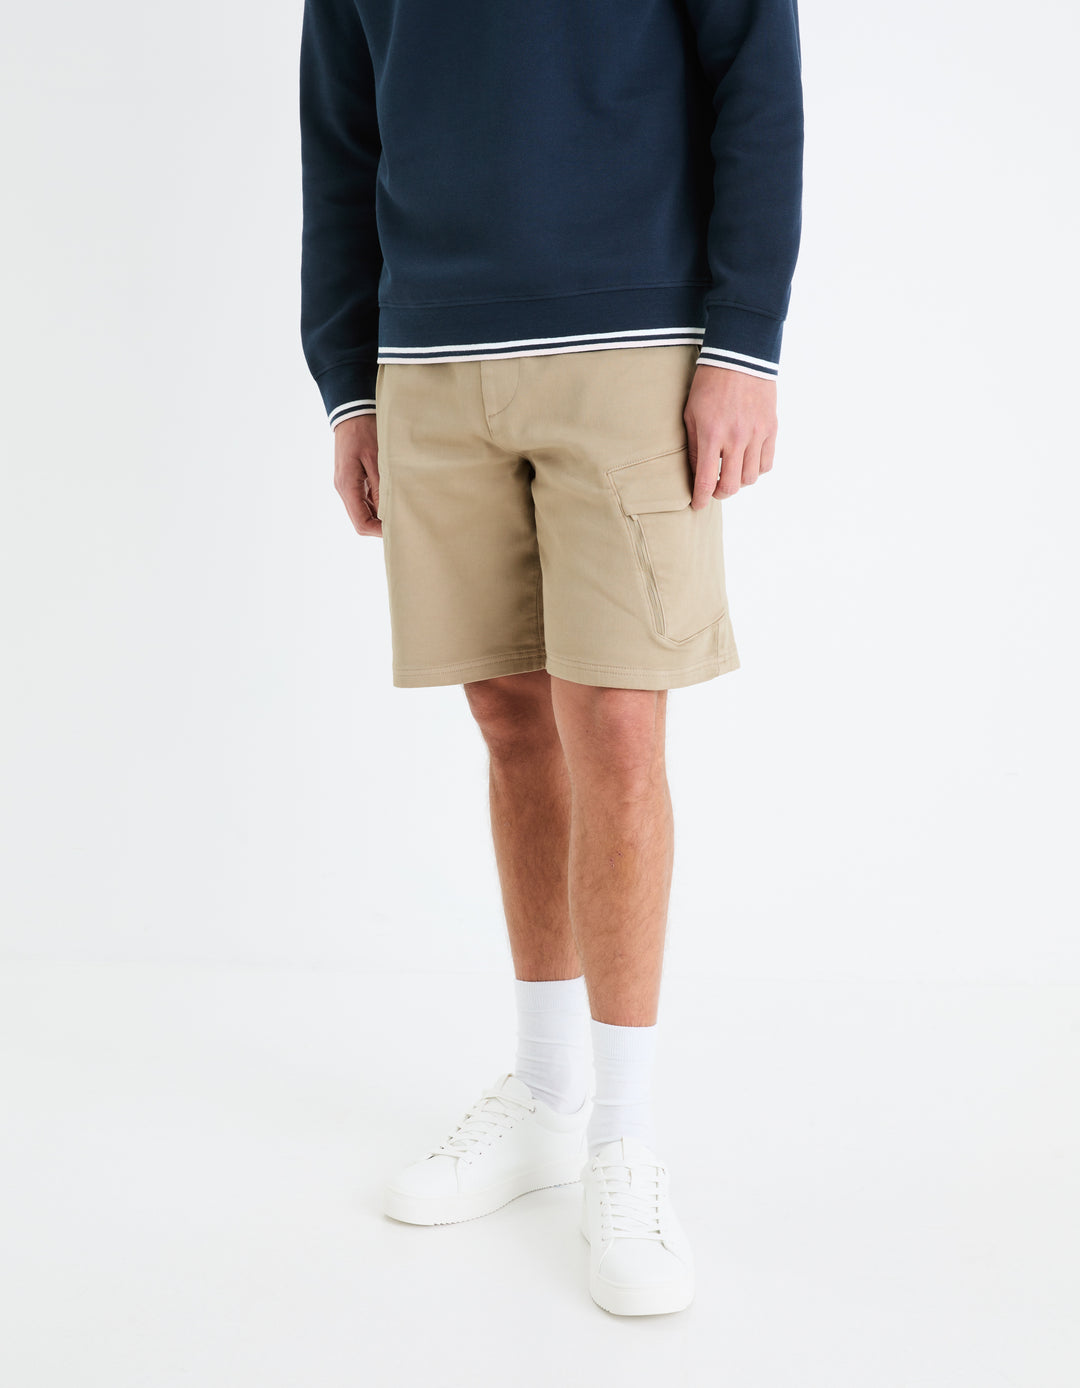 Stretch cotton knit Bermuda shorts